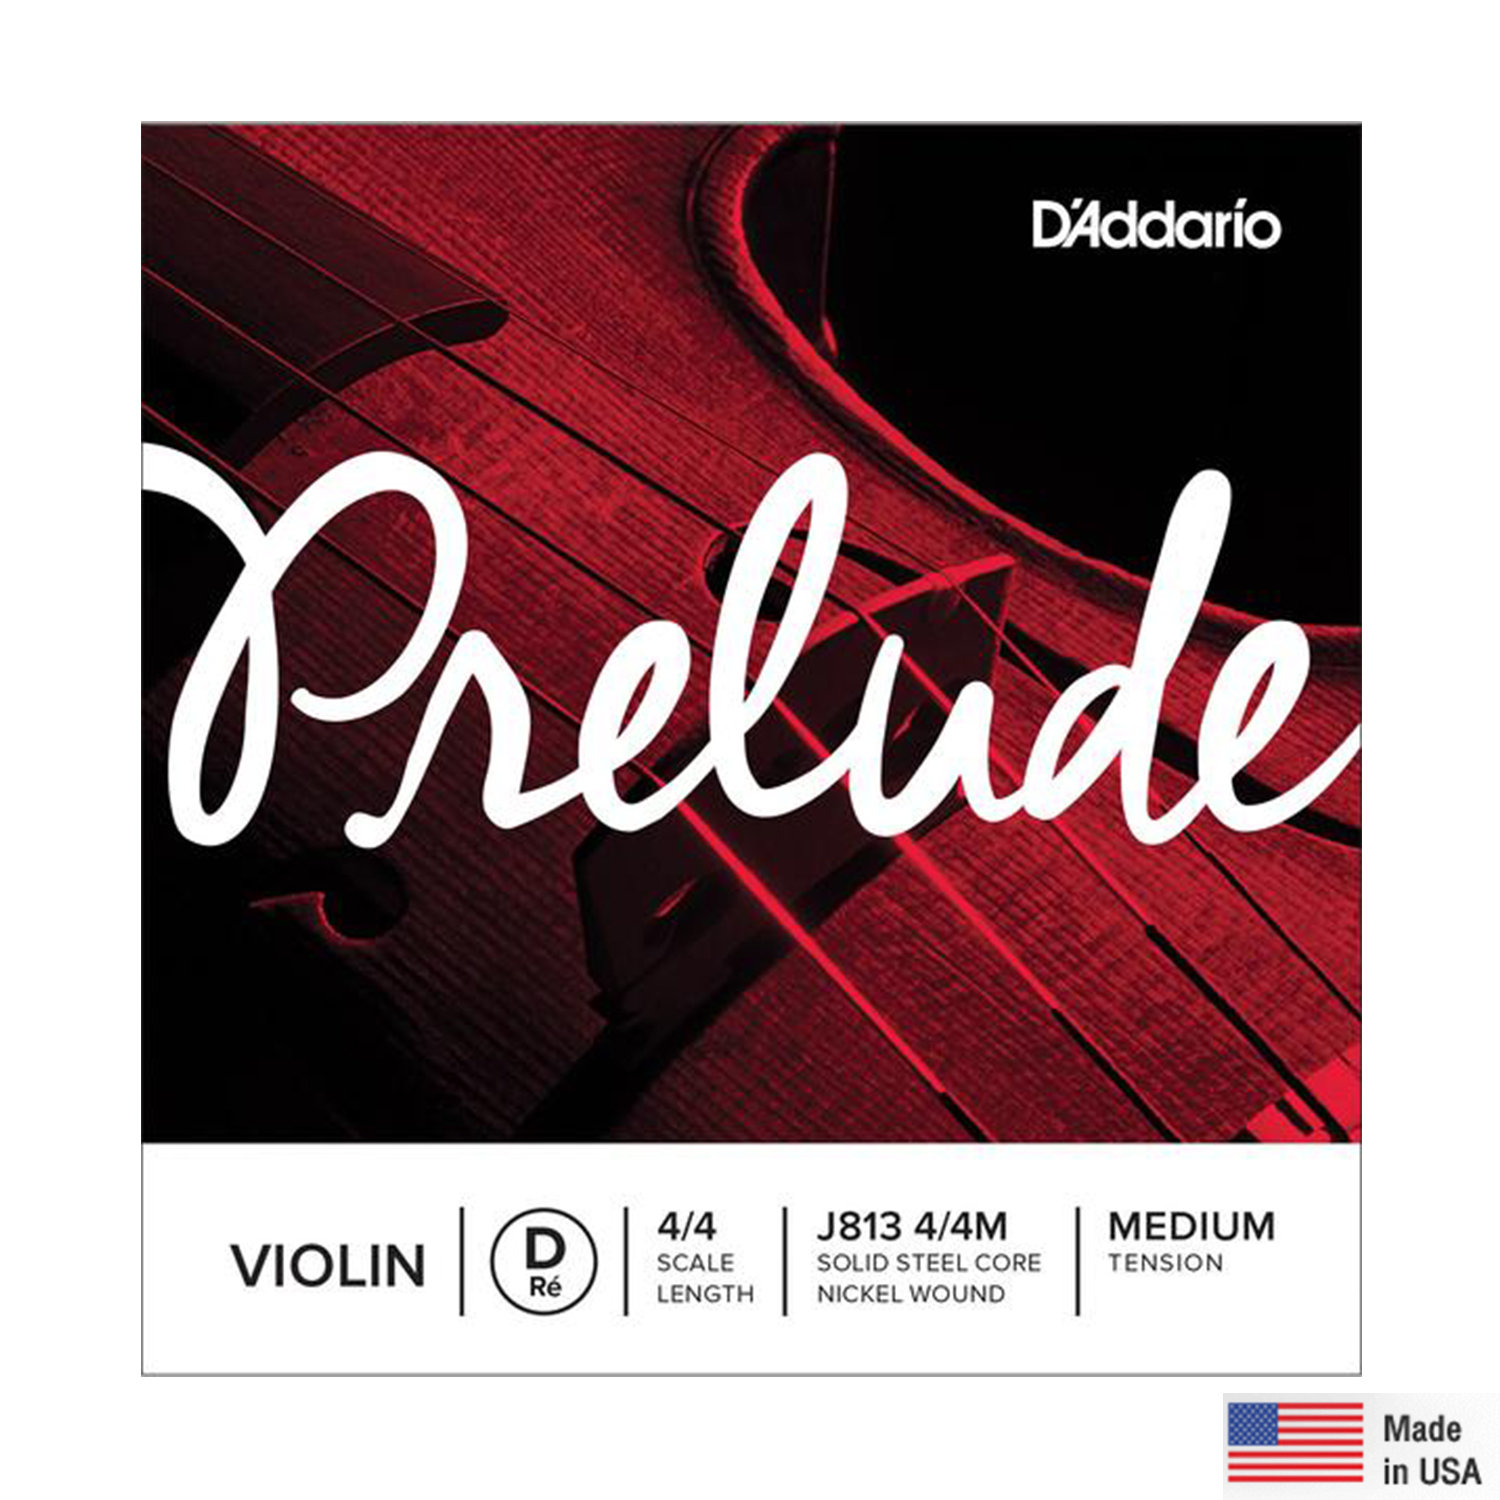 D'Addario® Prelude J813 4/4M สายไวโอลิน แบบแยก สาย D / สาย 3  ของแท้ 100% (Violin String, Medium Tension, Solid Steel Core Aluminum Wound) ** Made in USA **